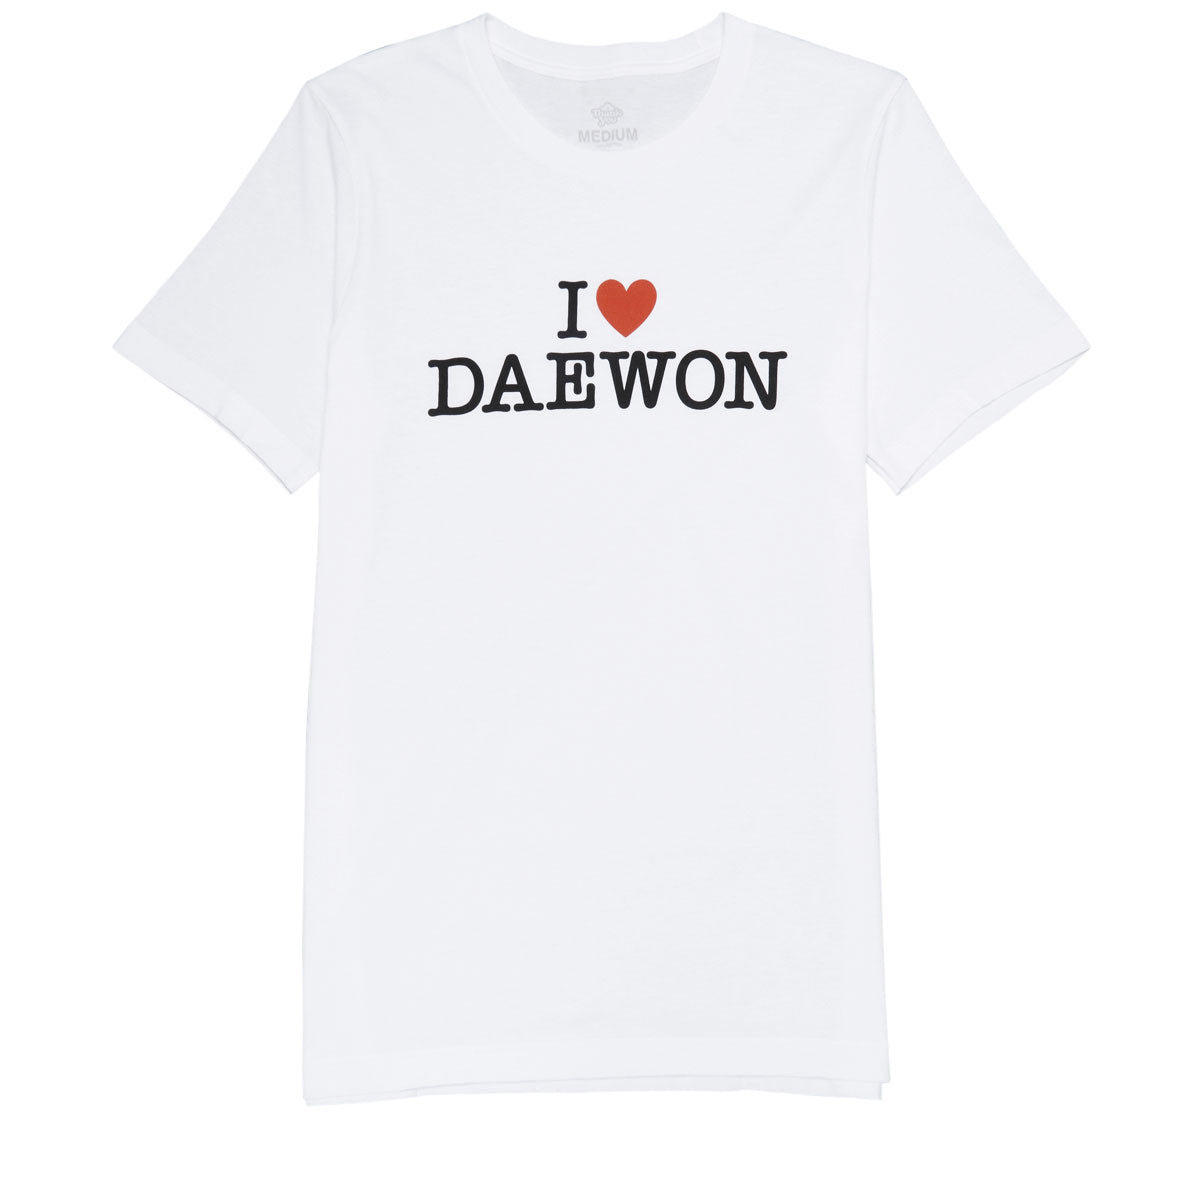 Thank You I Love Daewon T-Shirt - White image 1